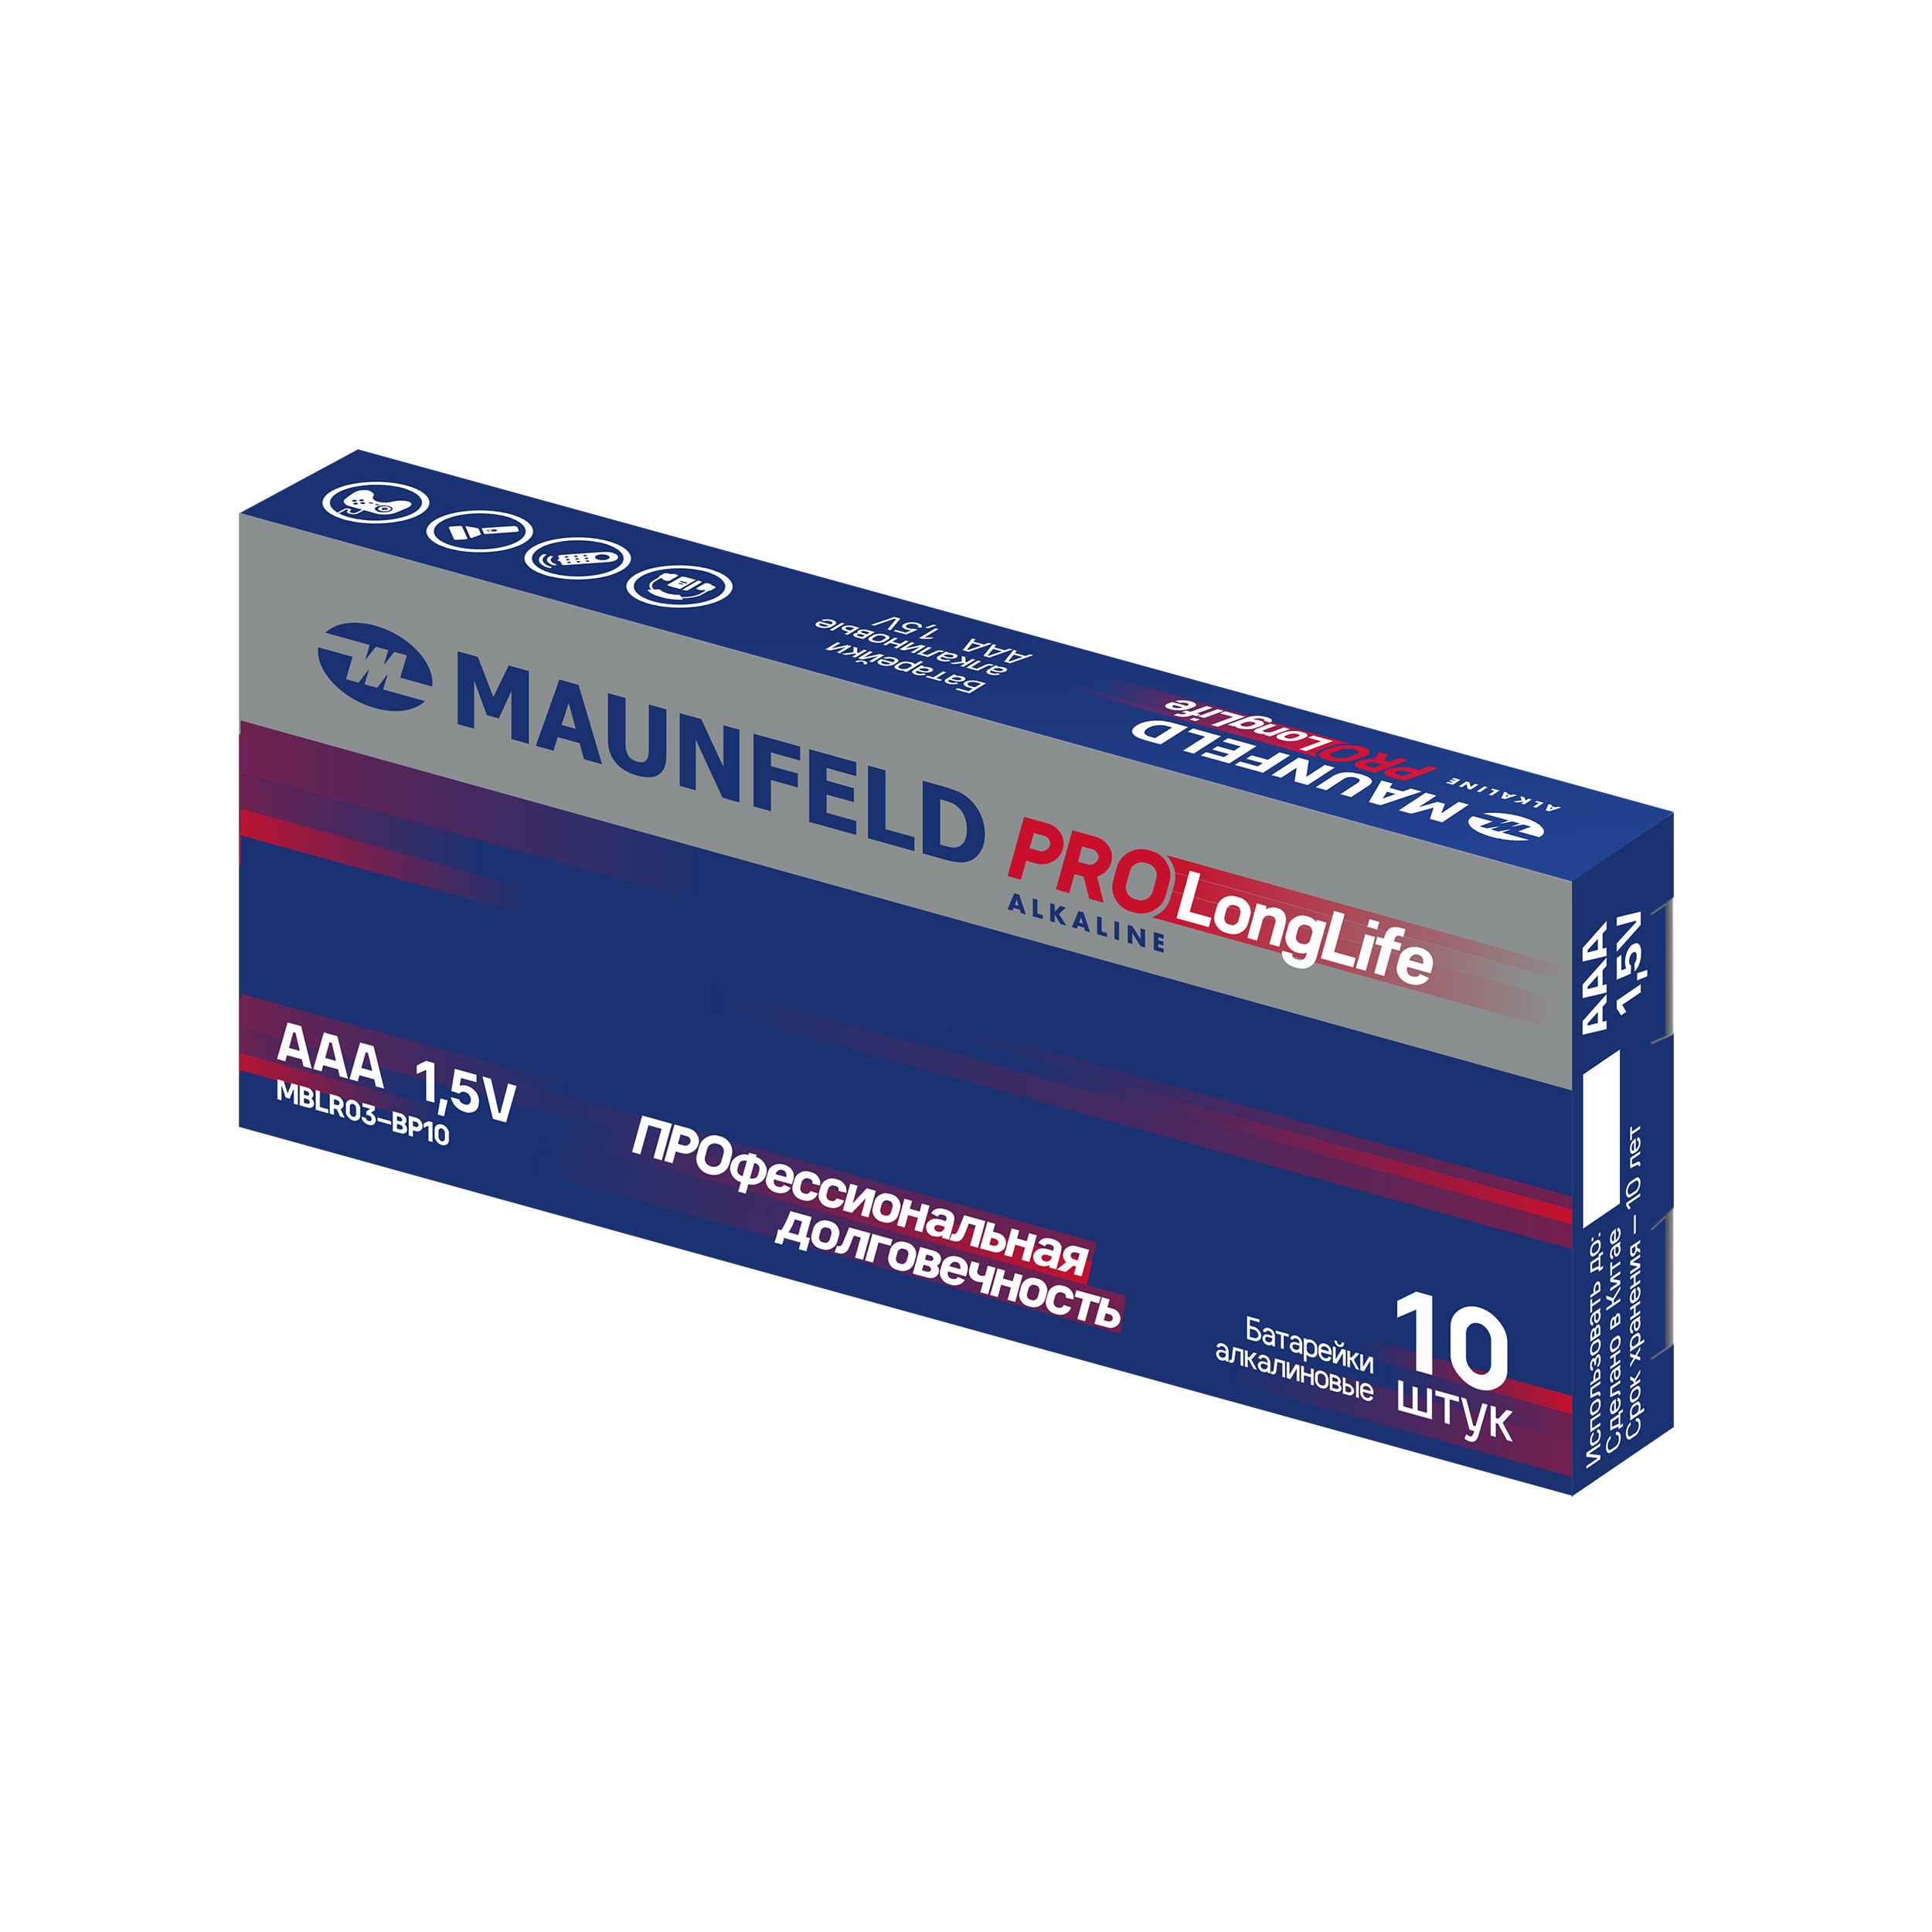 Батарейки MAUNFELD PRO Long Life Alkaline ААА(LR03) MBLR03-PB10, упаковка 10 шт.